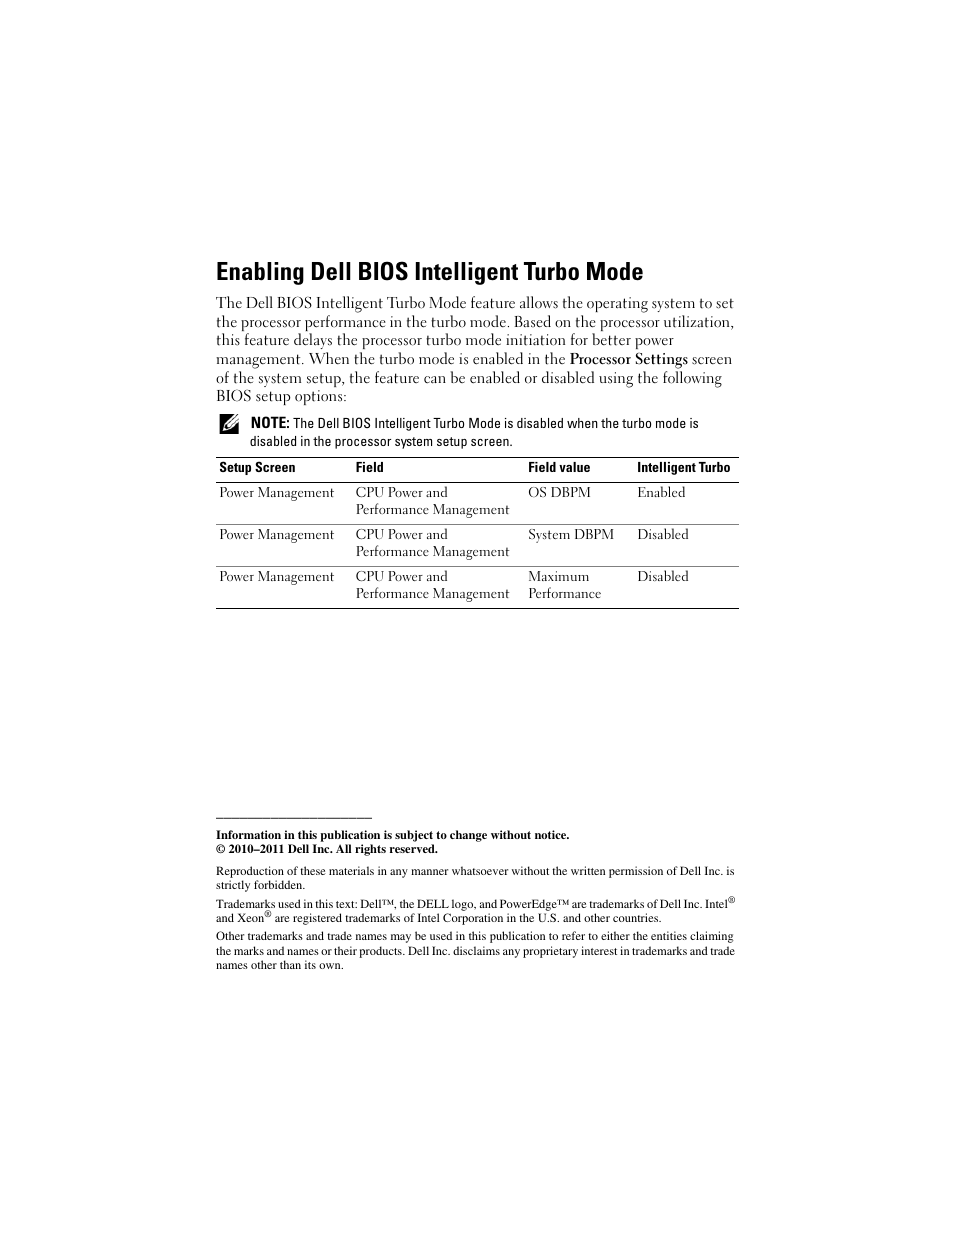 Enabling dell bios intelligent turbo mode | Dell POWEREDGE R610 Manuel d'utilisation | Page 5 / 38